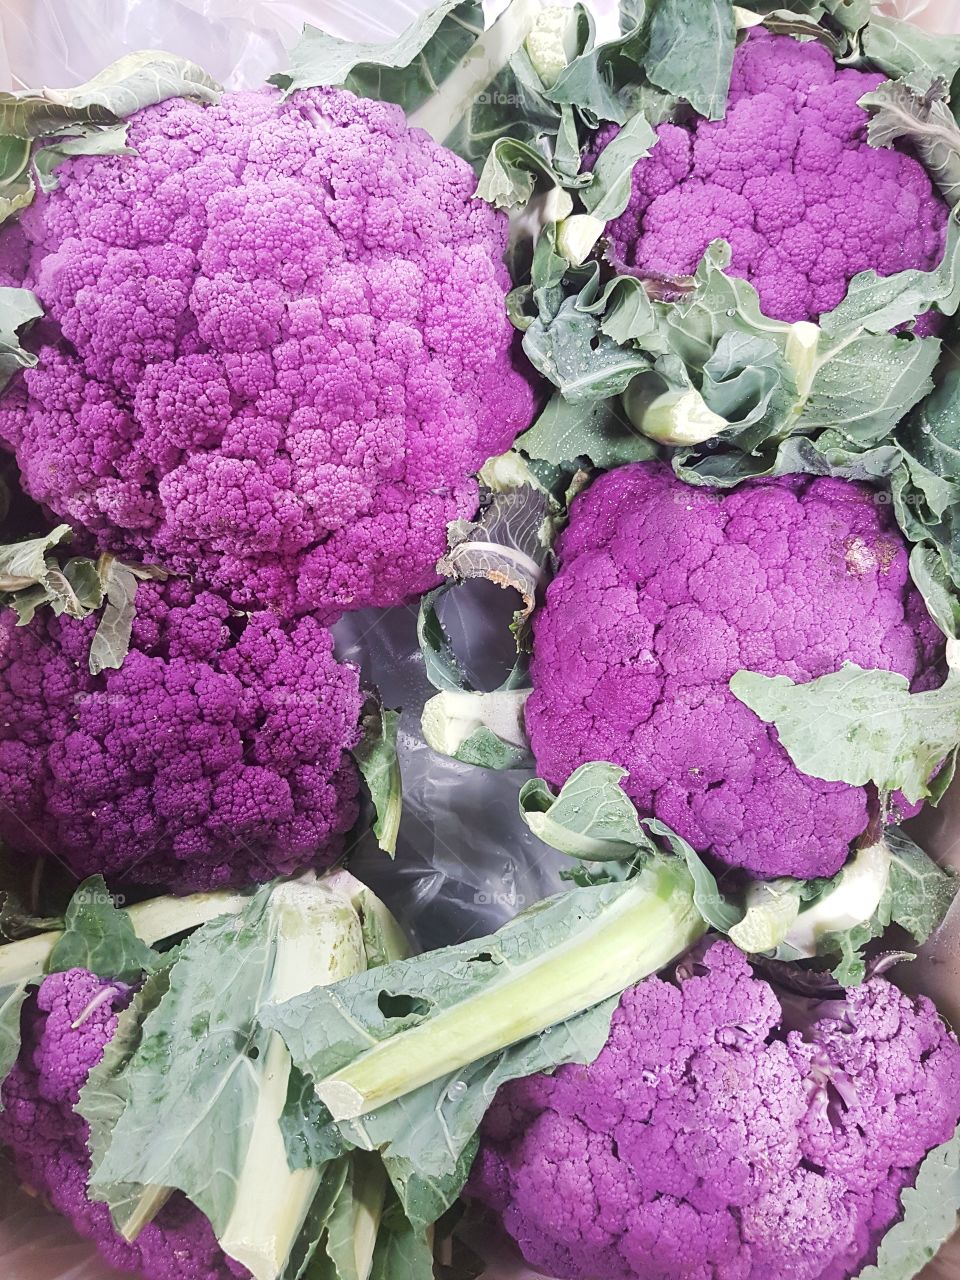 Fresh purple cabbages vegetables